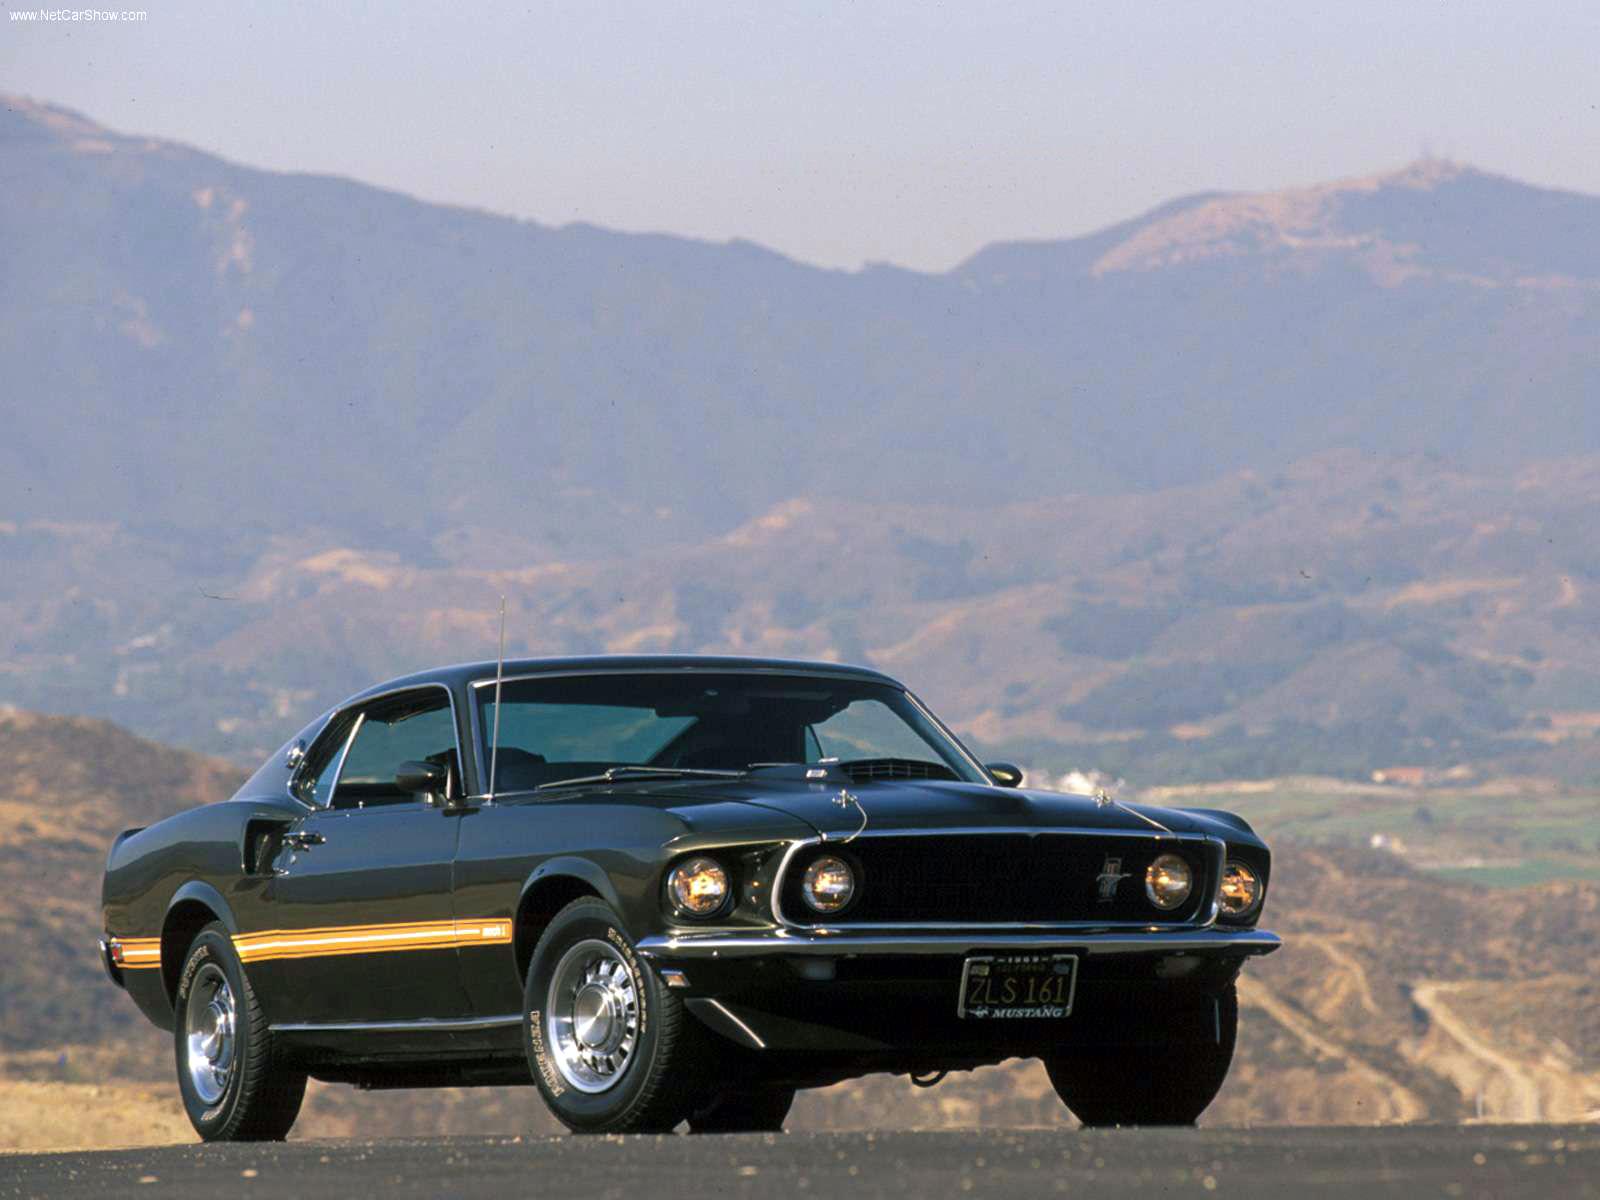 transpress nz: 1969 Ford Mustang Mach 1